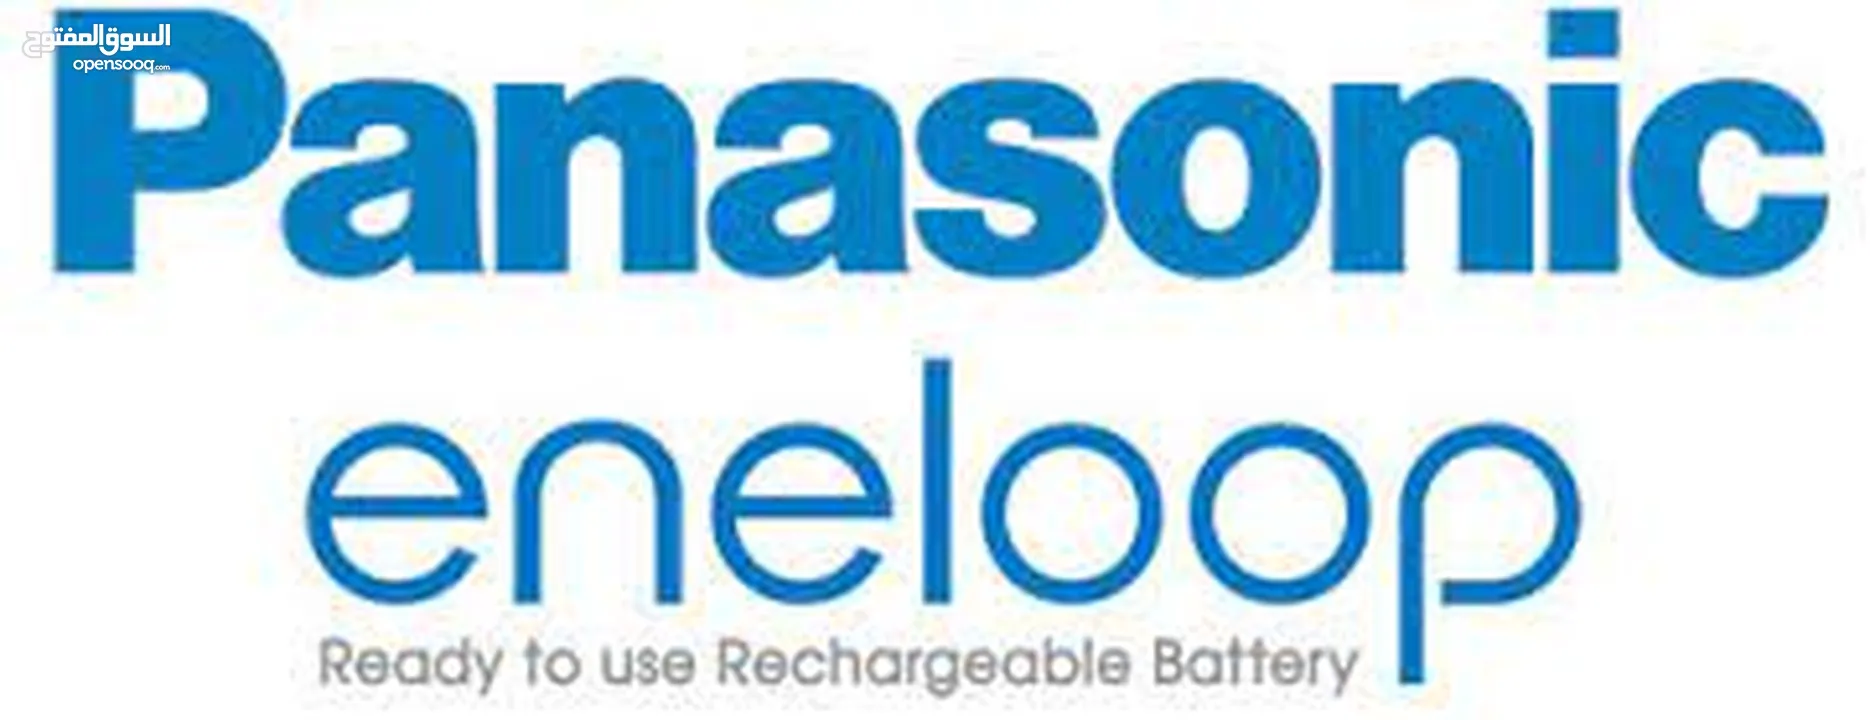 Panasonic Battery Charger شاحن بطاريات بناسونك صناعة اليابان مع بطاريات شحن عدد 2 قياس AA